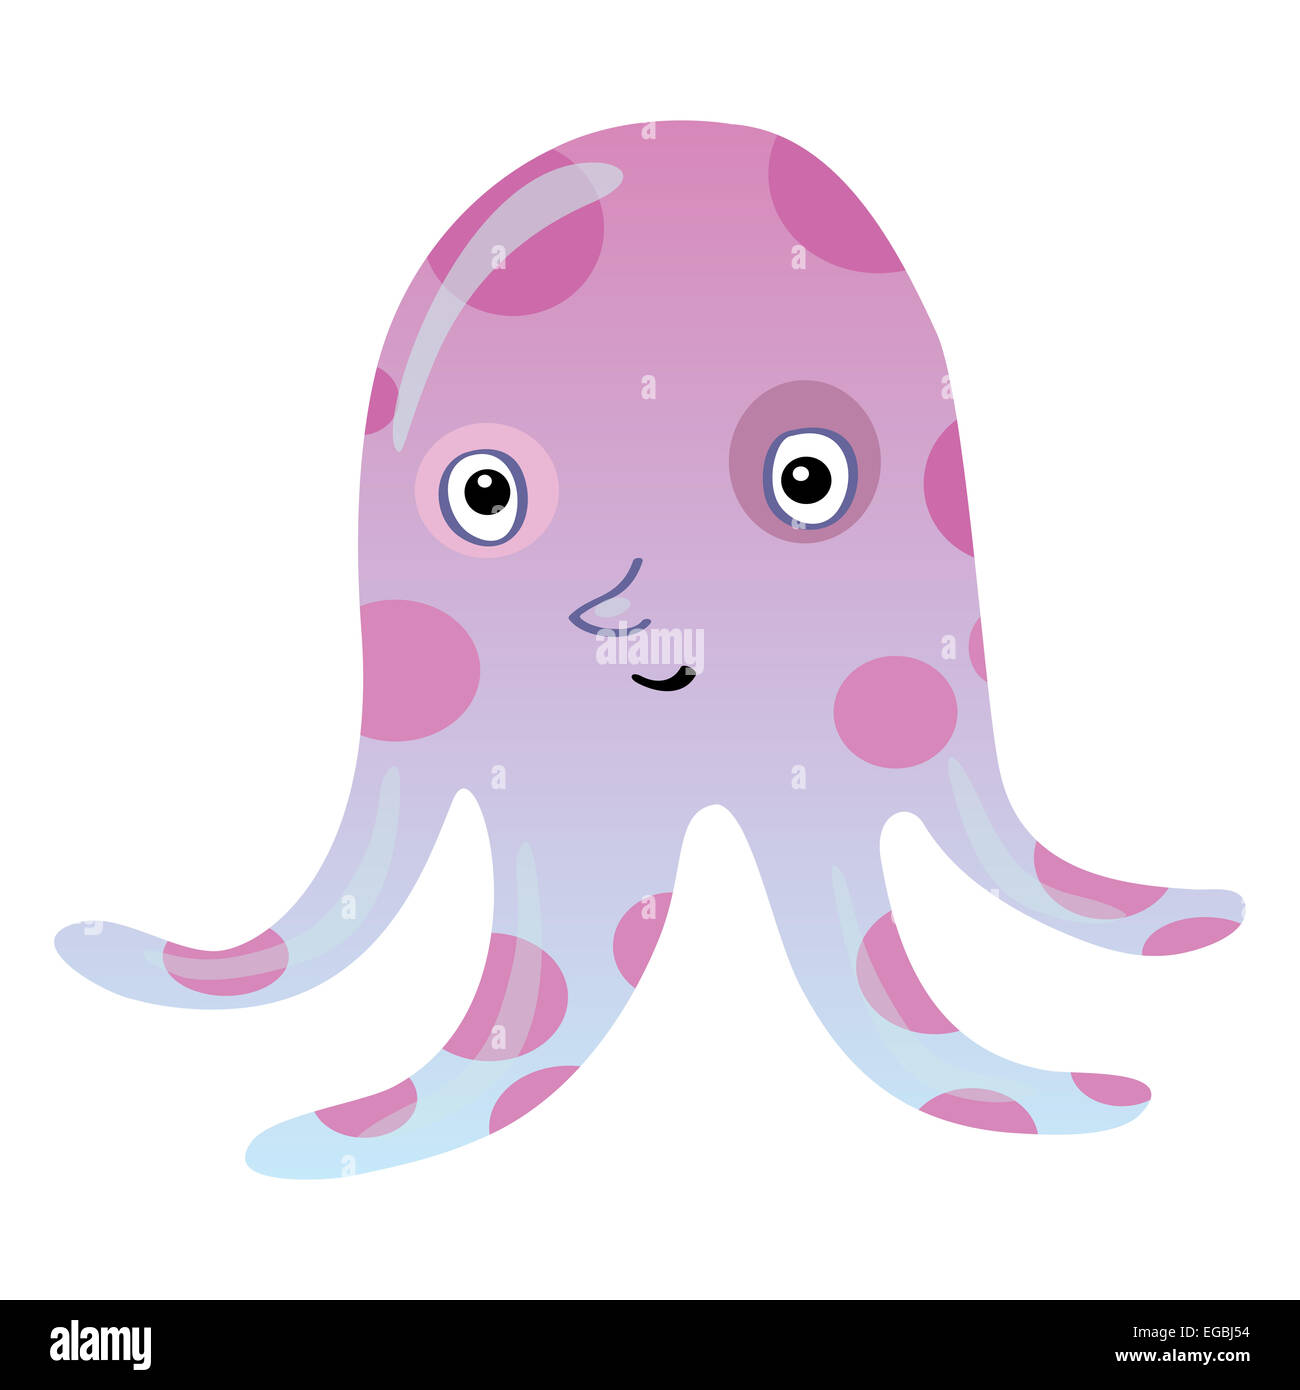 Funny cartoon octopus or an alien monster or Kraken Stock Photo